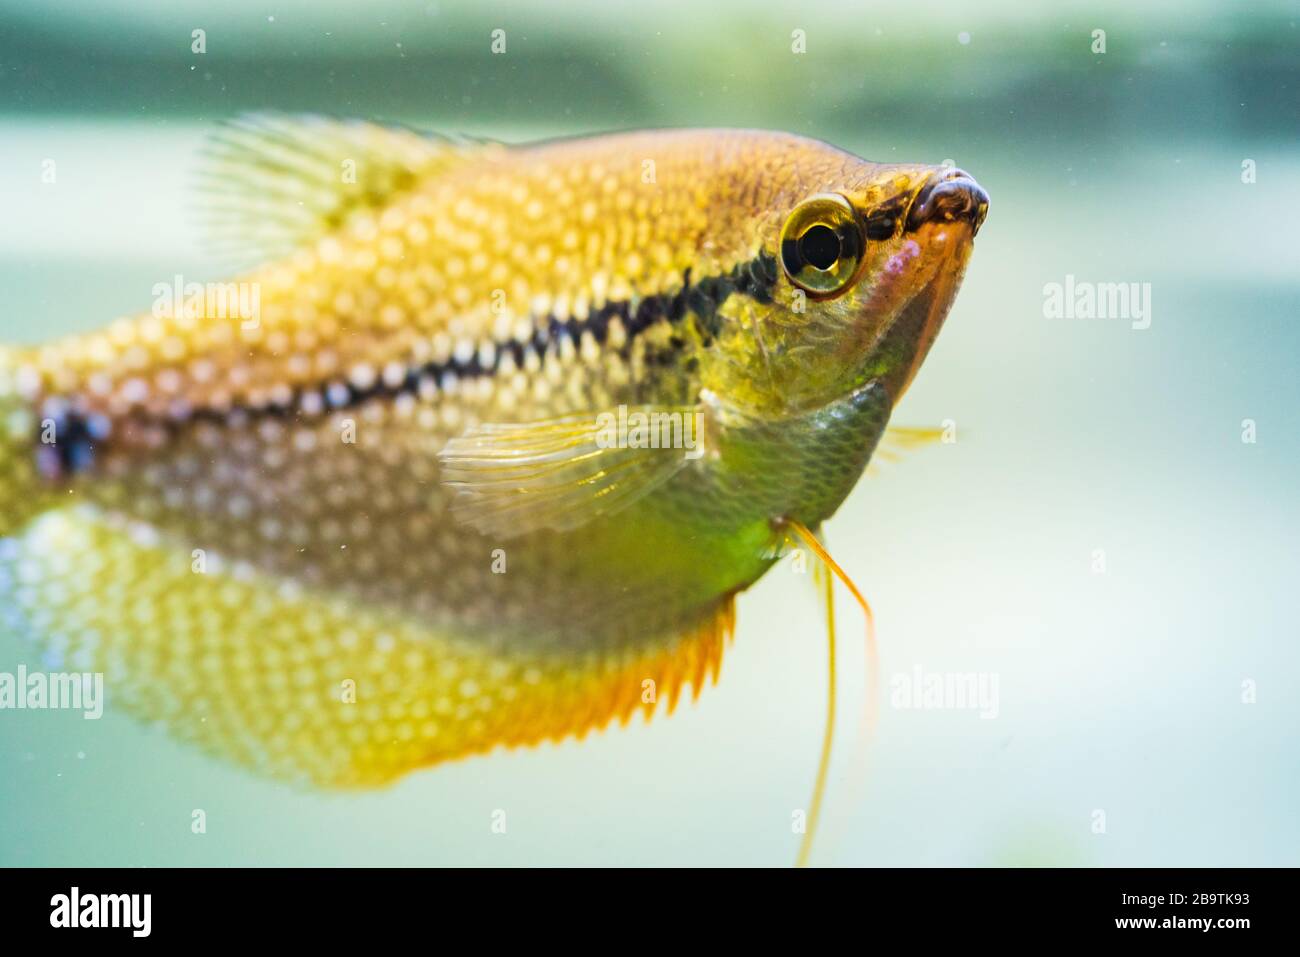 Pearl gourami Trichopodus leerii freshwater aquarium fish in fish tank. Aquaria concept Stock Photo